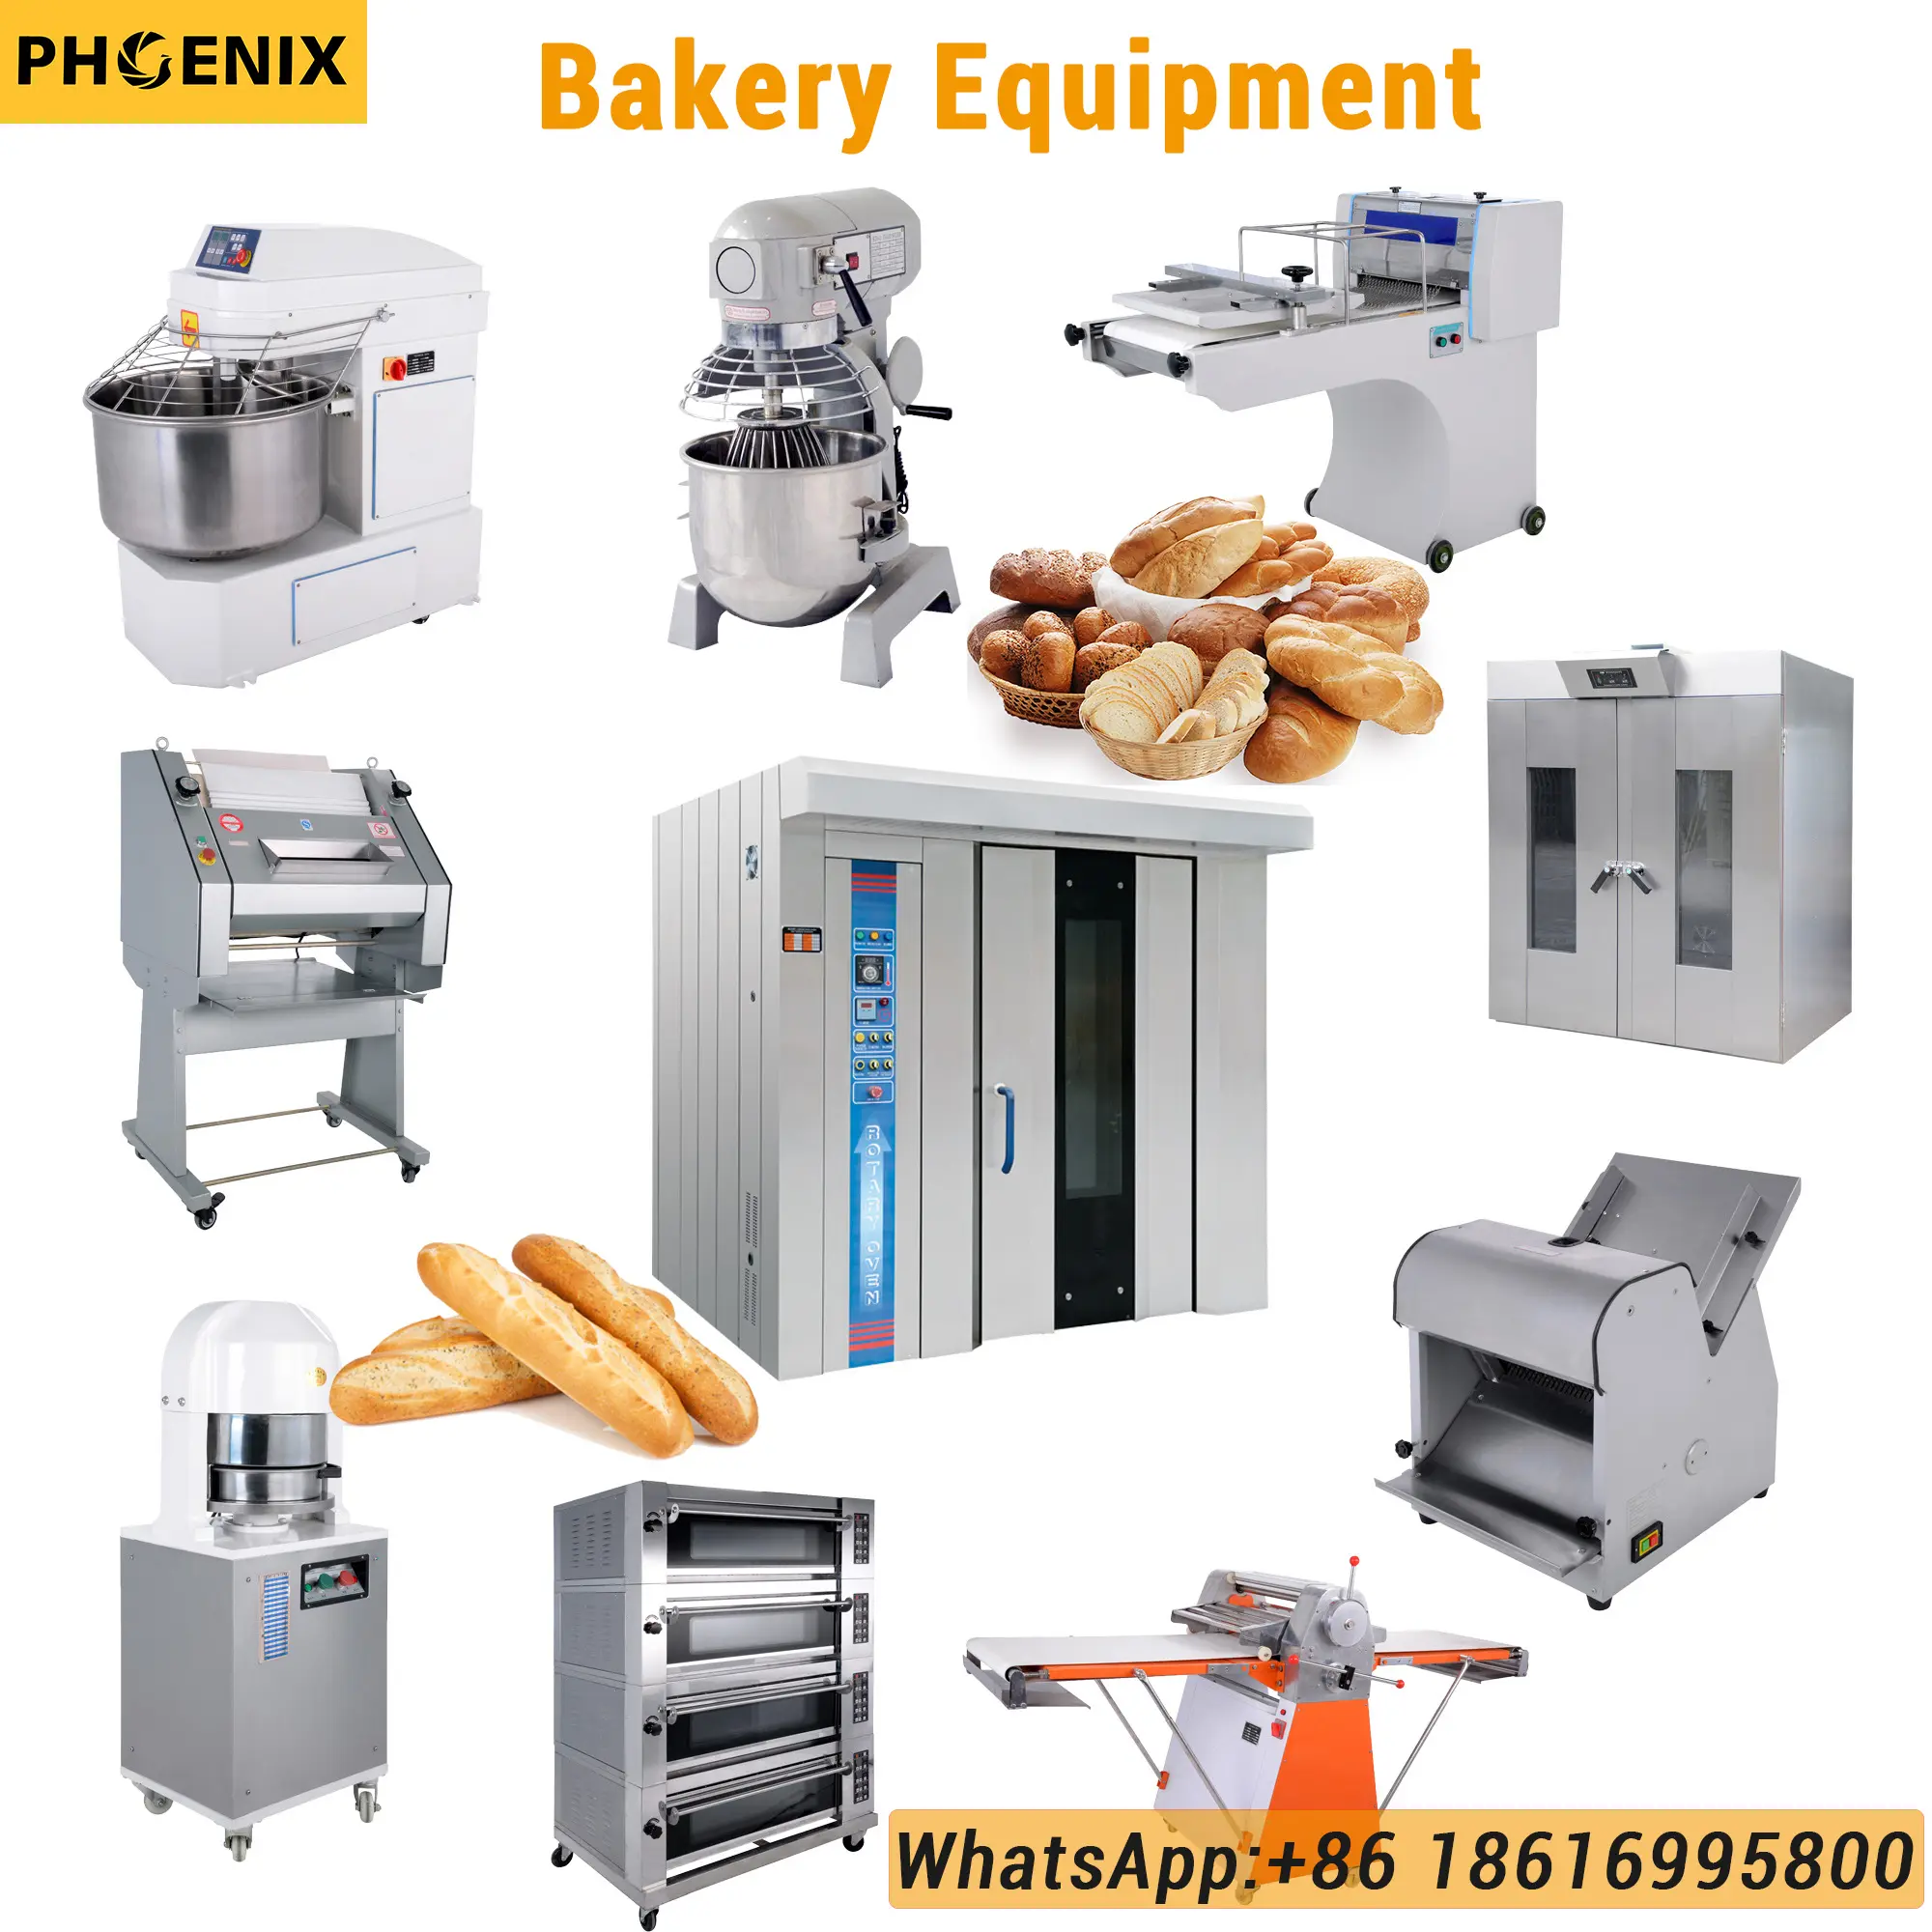 Supply全体ベーカリーラインオーブンミキサーIndustrialパン製造機Commercial Bakery Baking Equipment